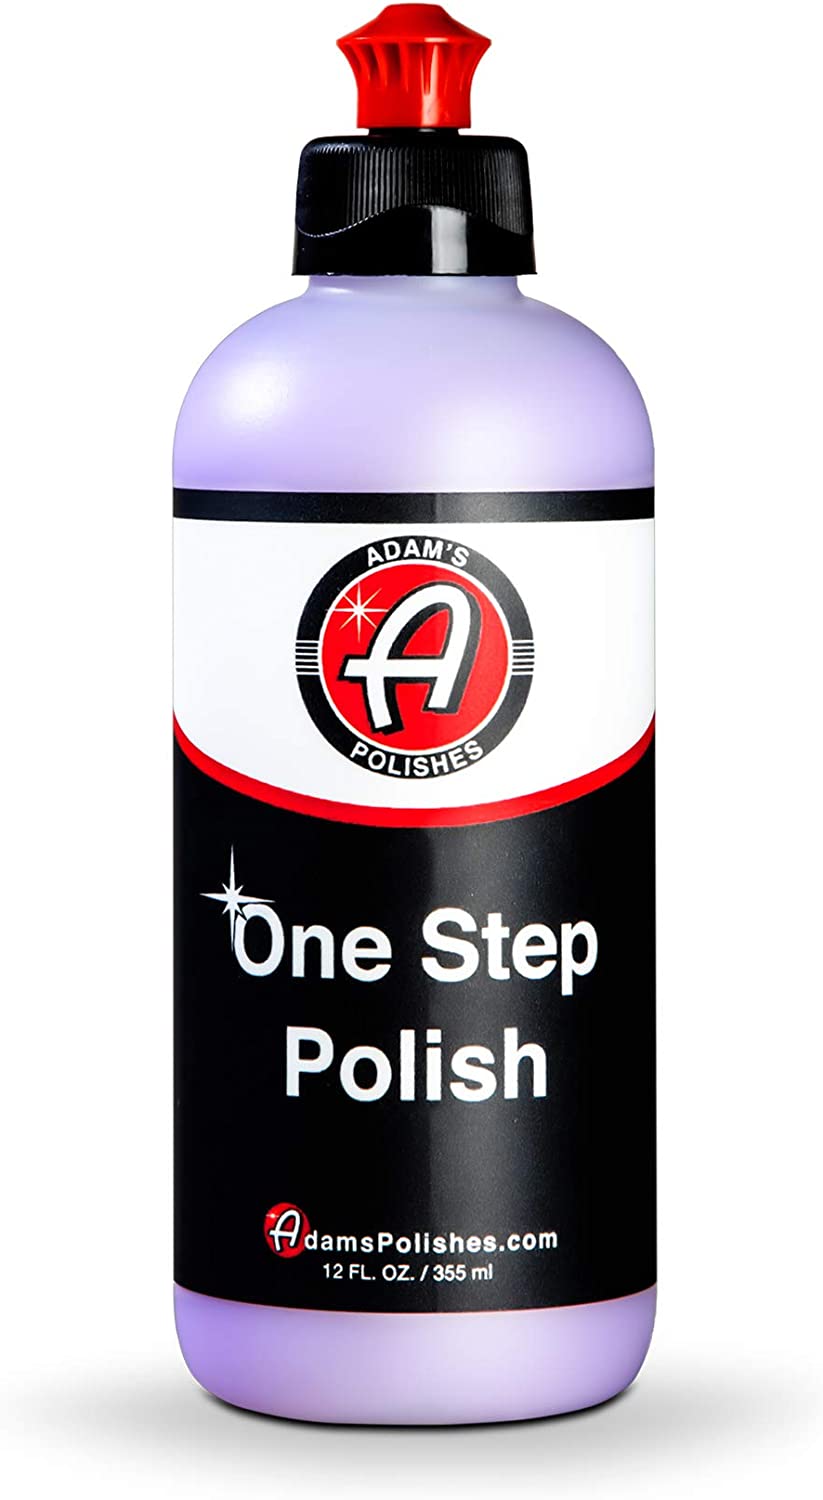 One Step polish